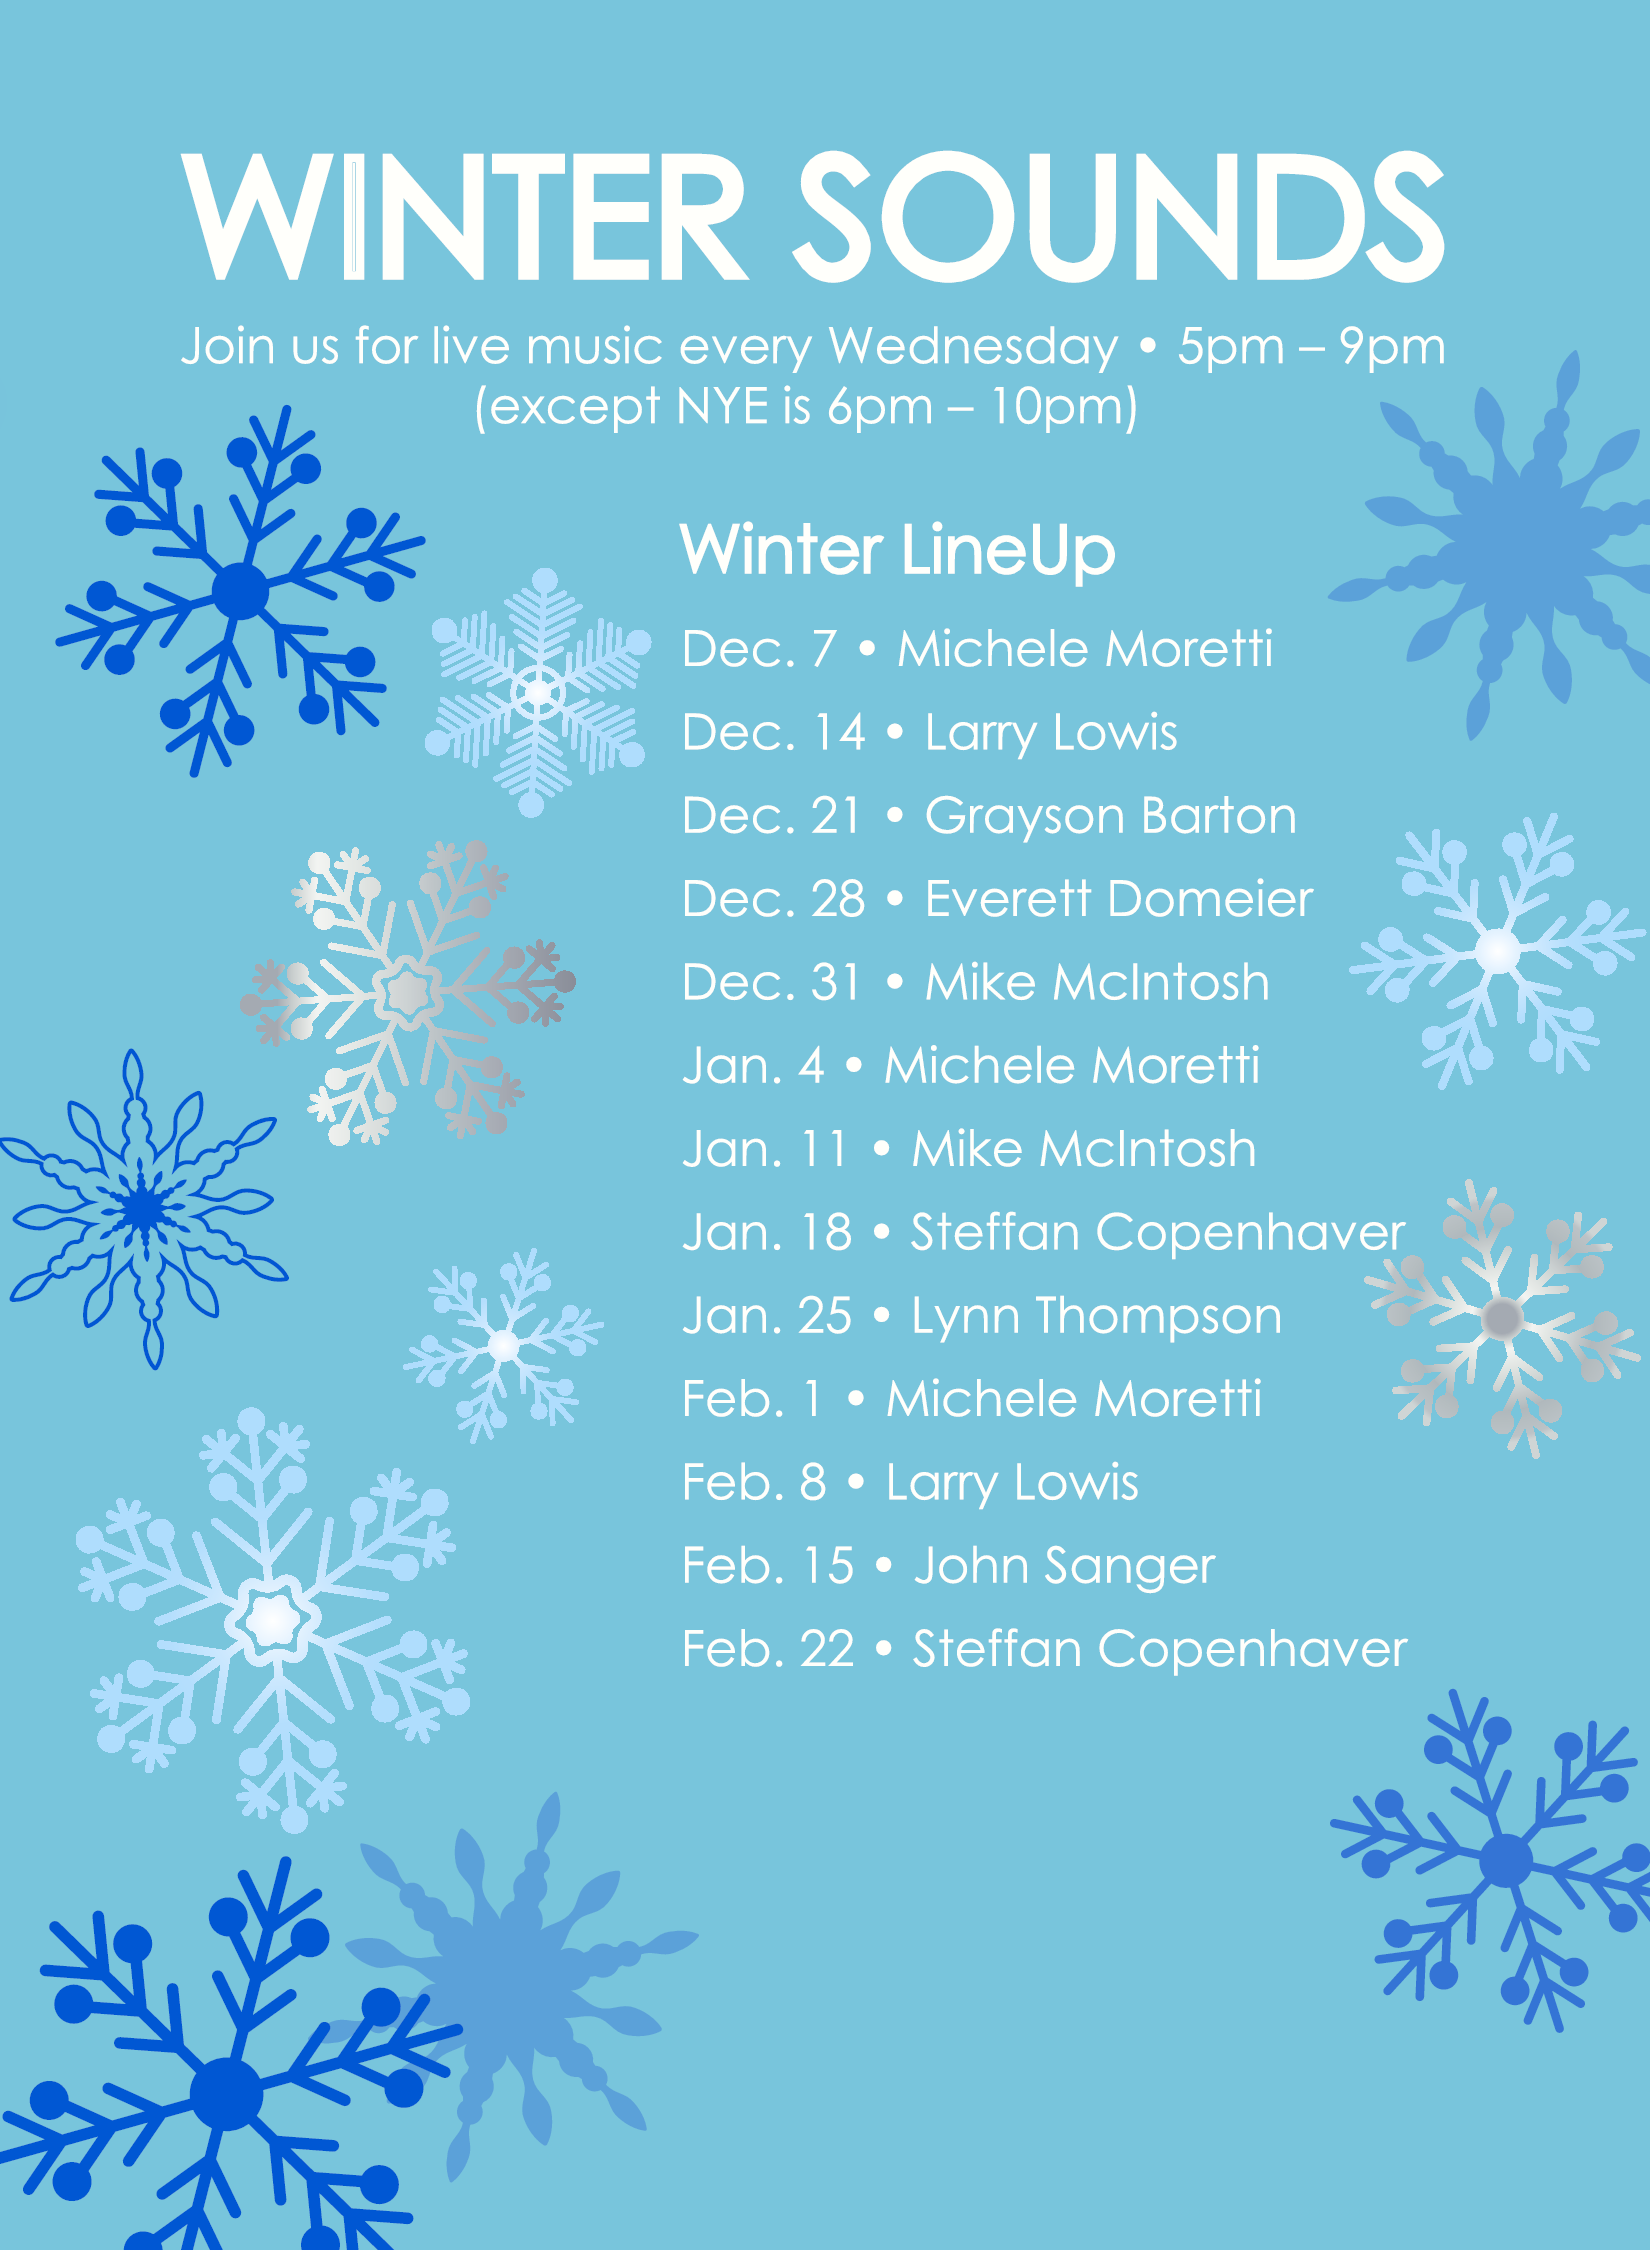 Winter Sounds Music Lineup